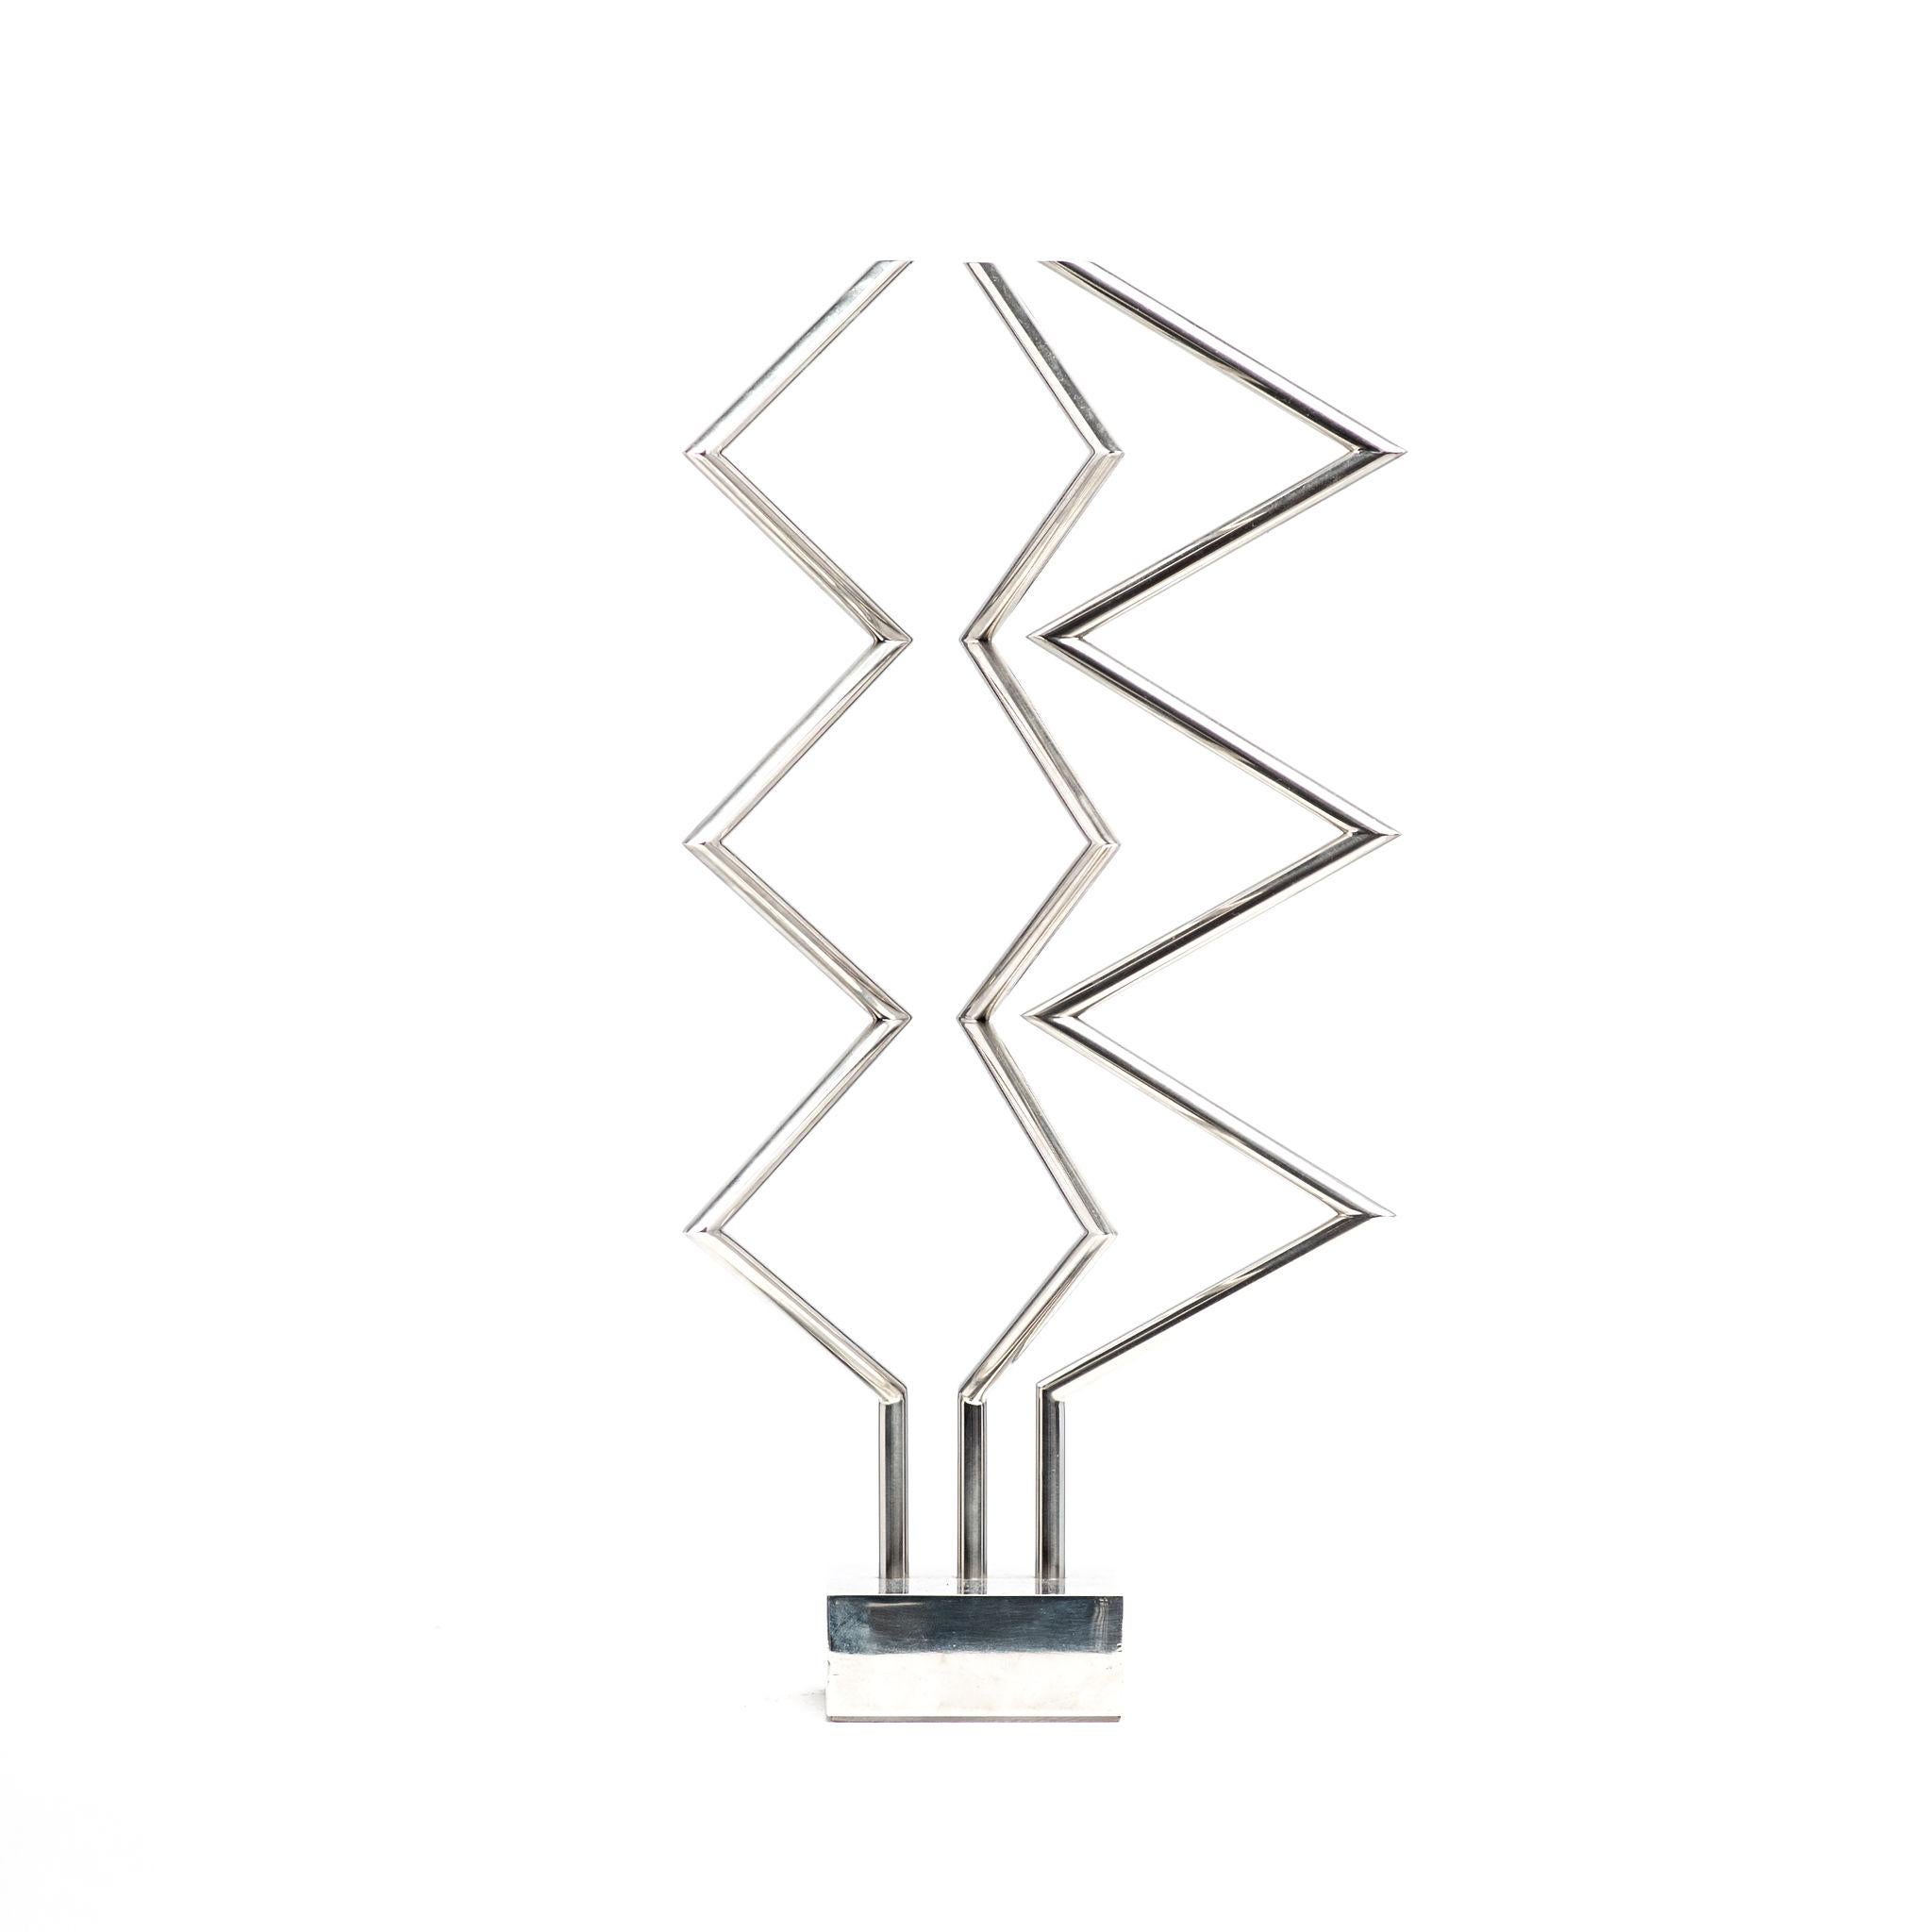 Yaacov Agam, Zig-Zag, Movable Kinetic chromed  Steel sculpture